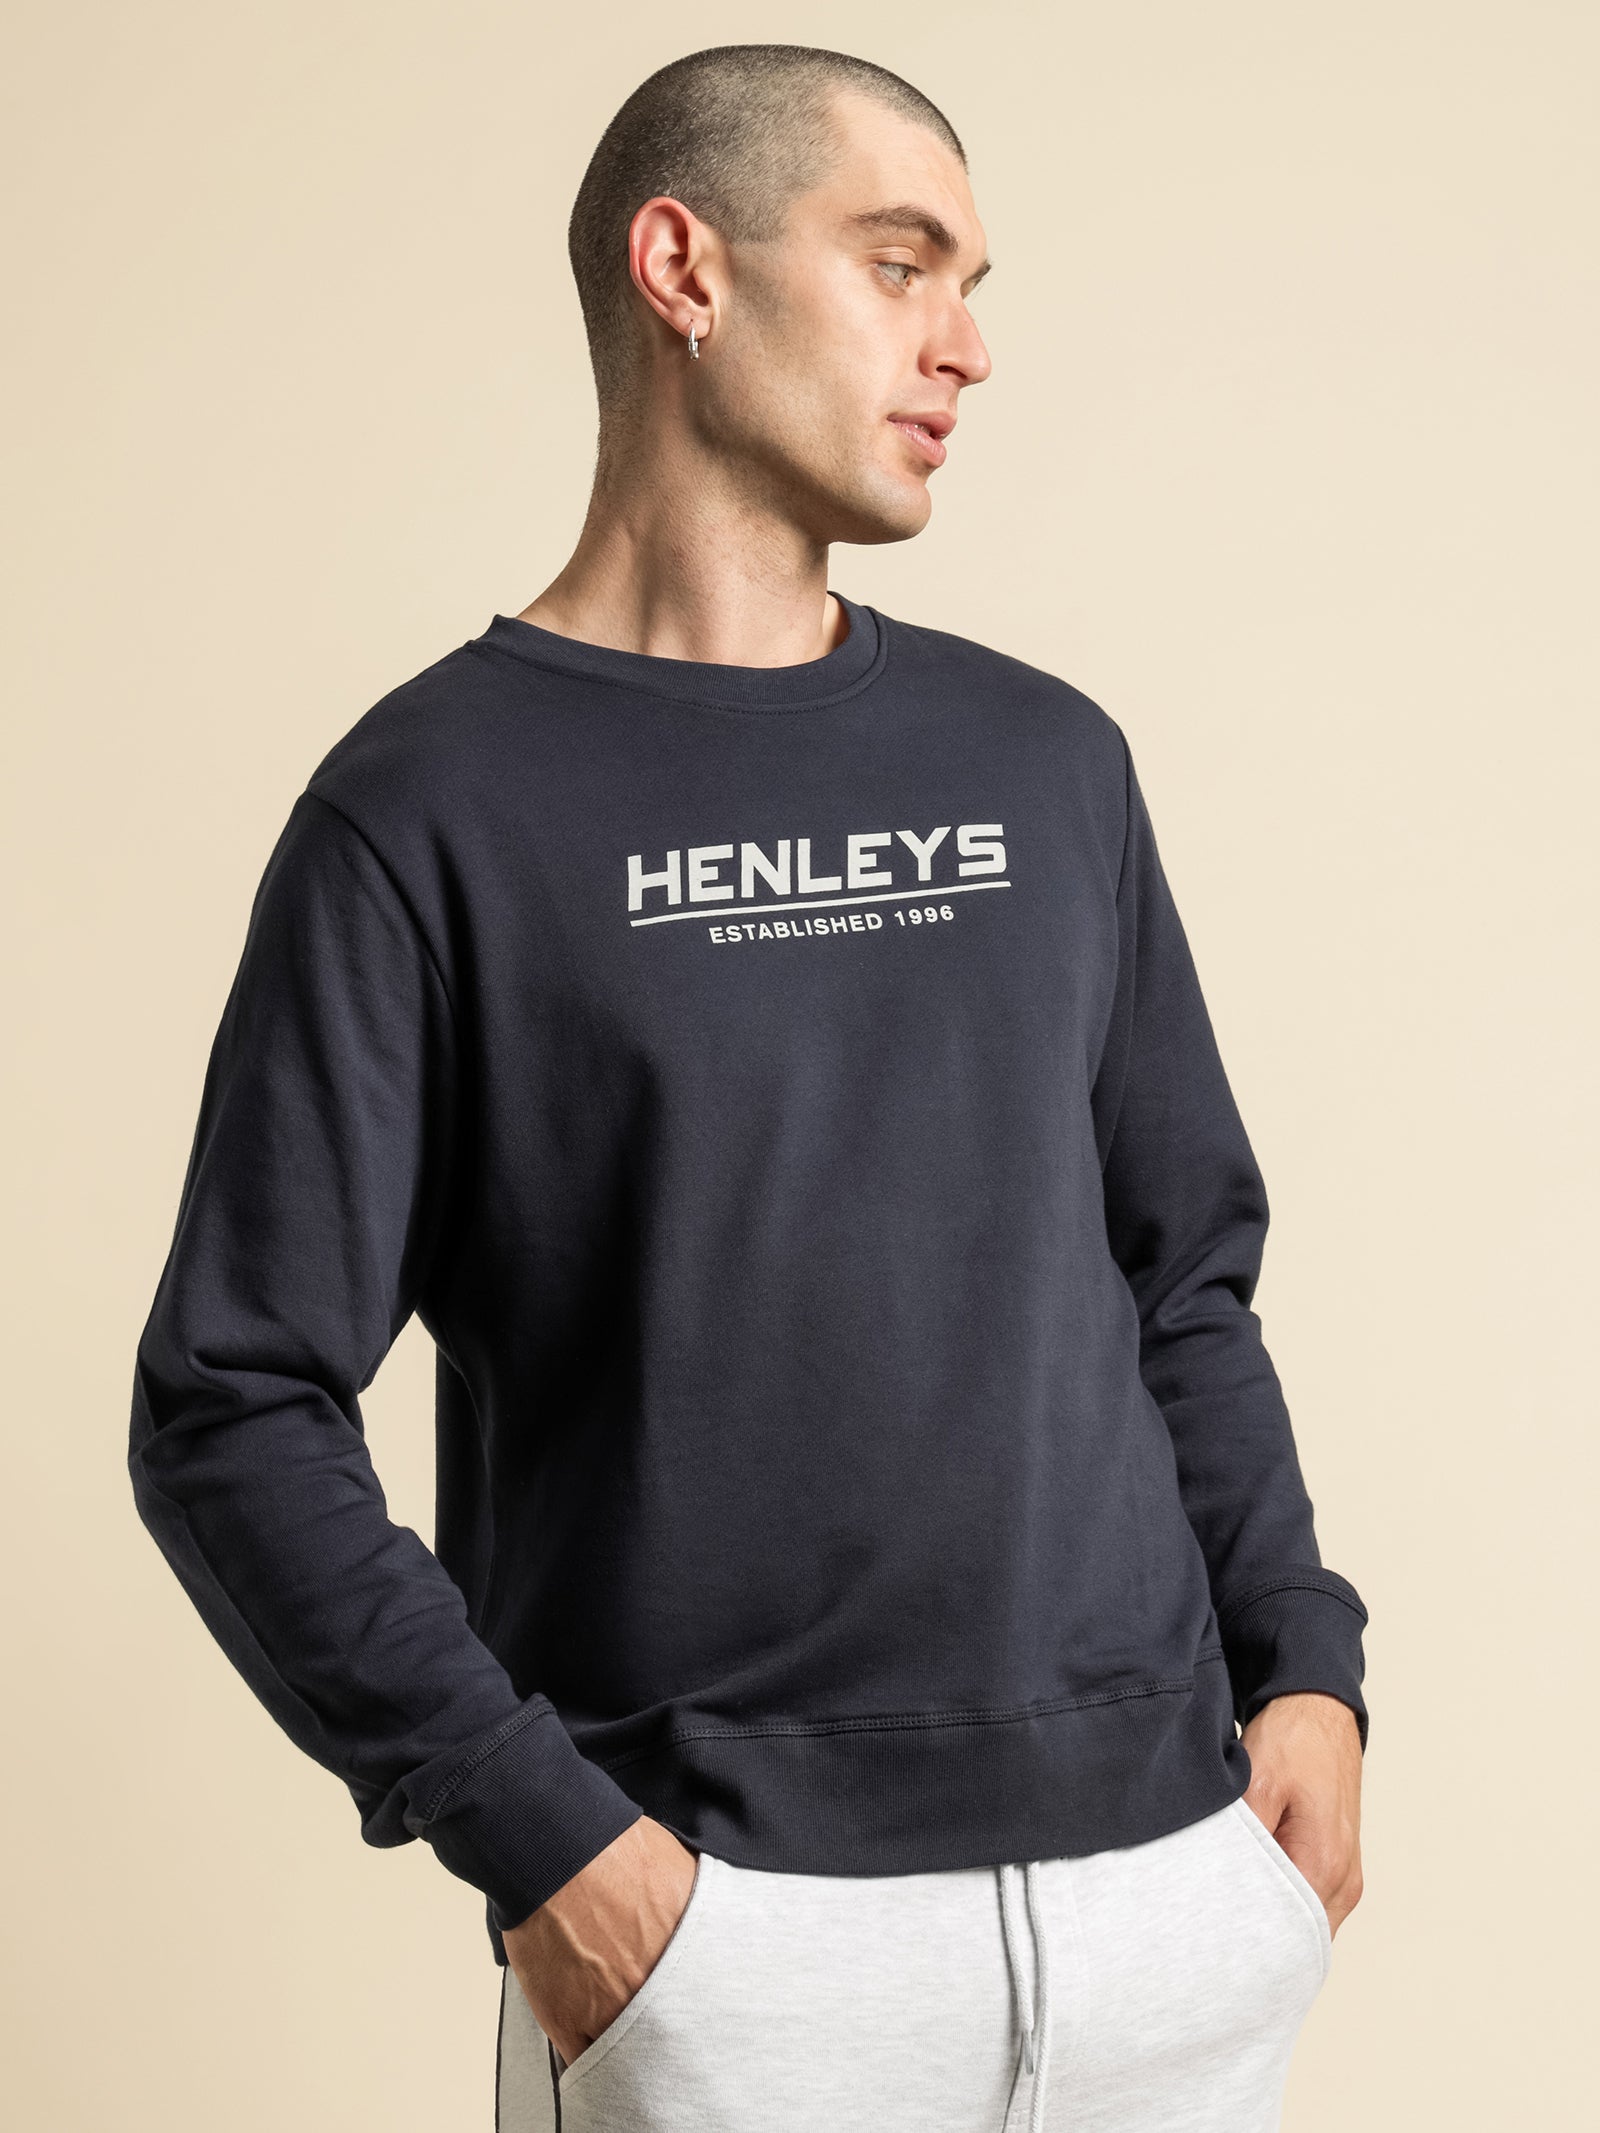 Henleys Clothing Australia | Glue Store